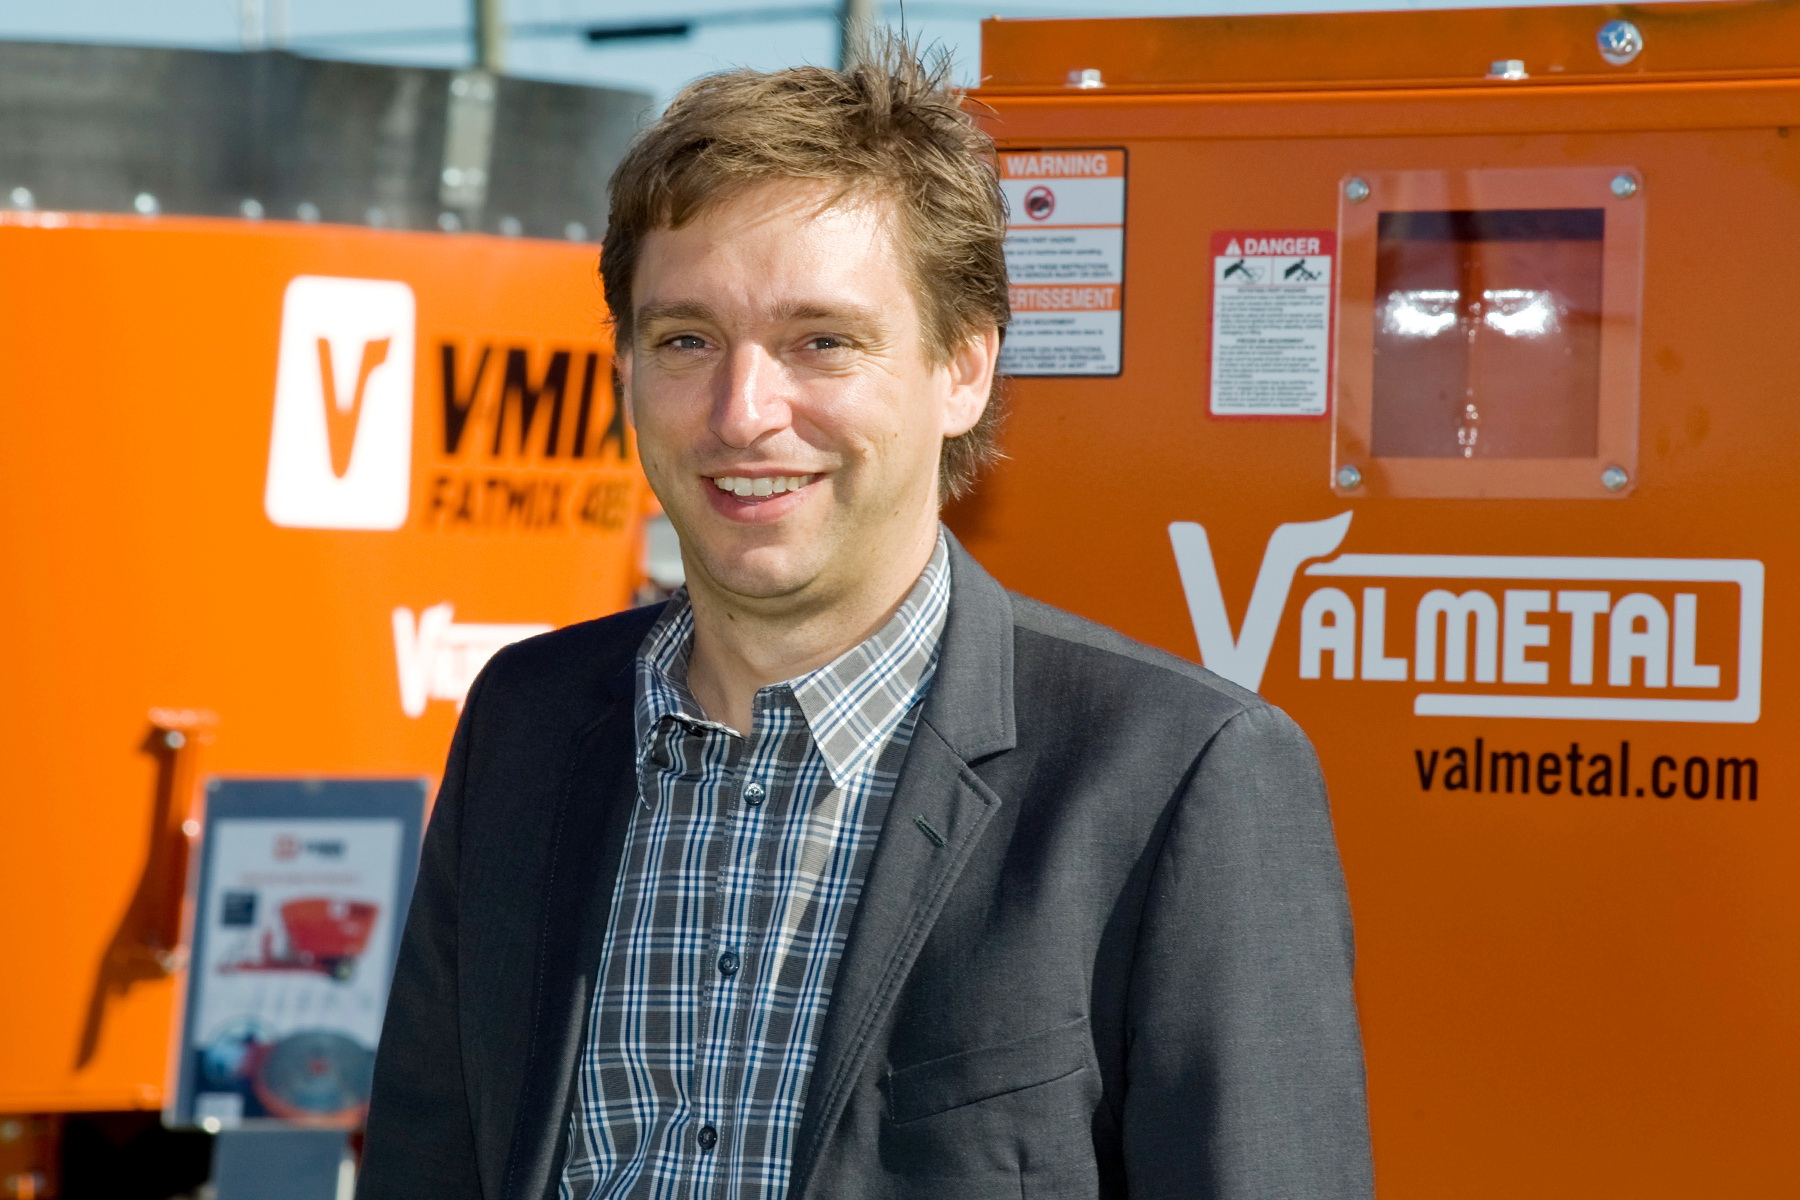 Picture of David Vallières of Valmetal